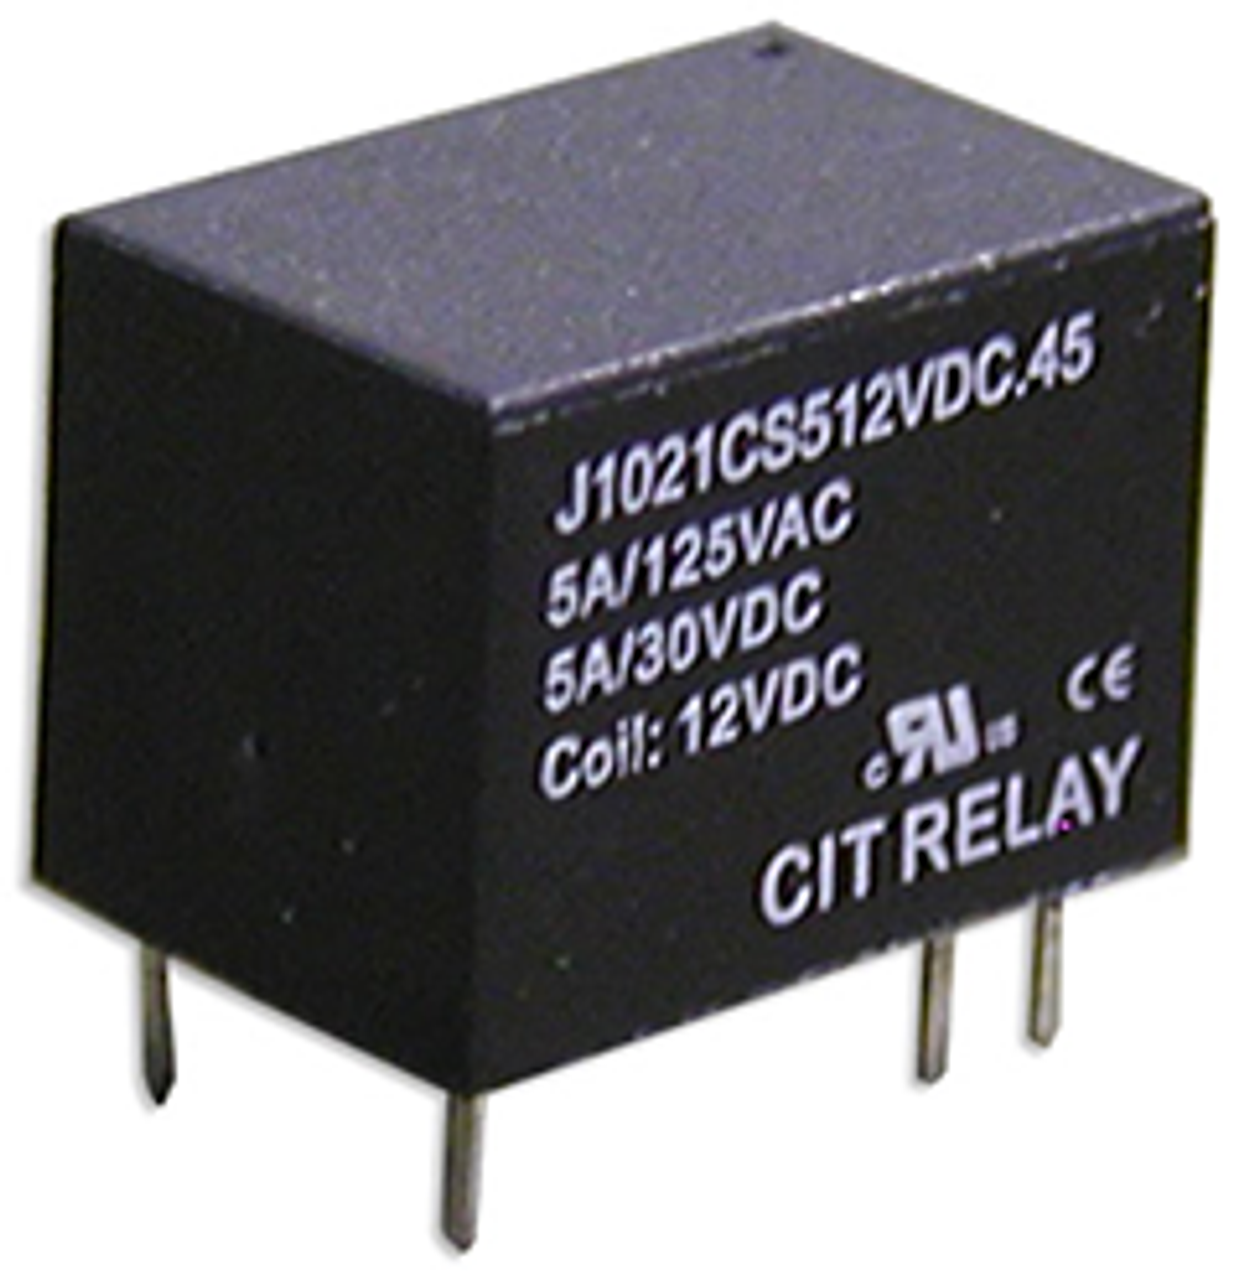 CIT Relay and Switch J1021CS36VDC.45 Power Relays